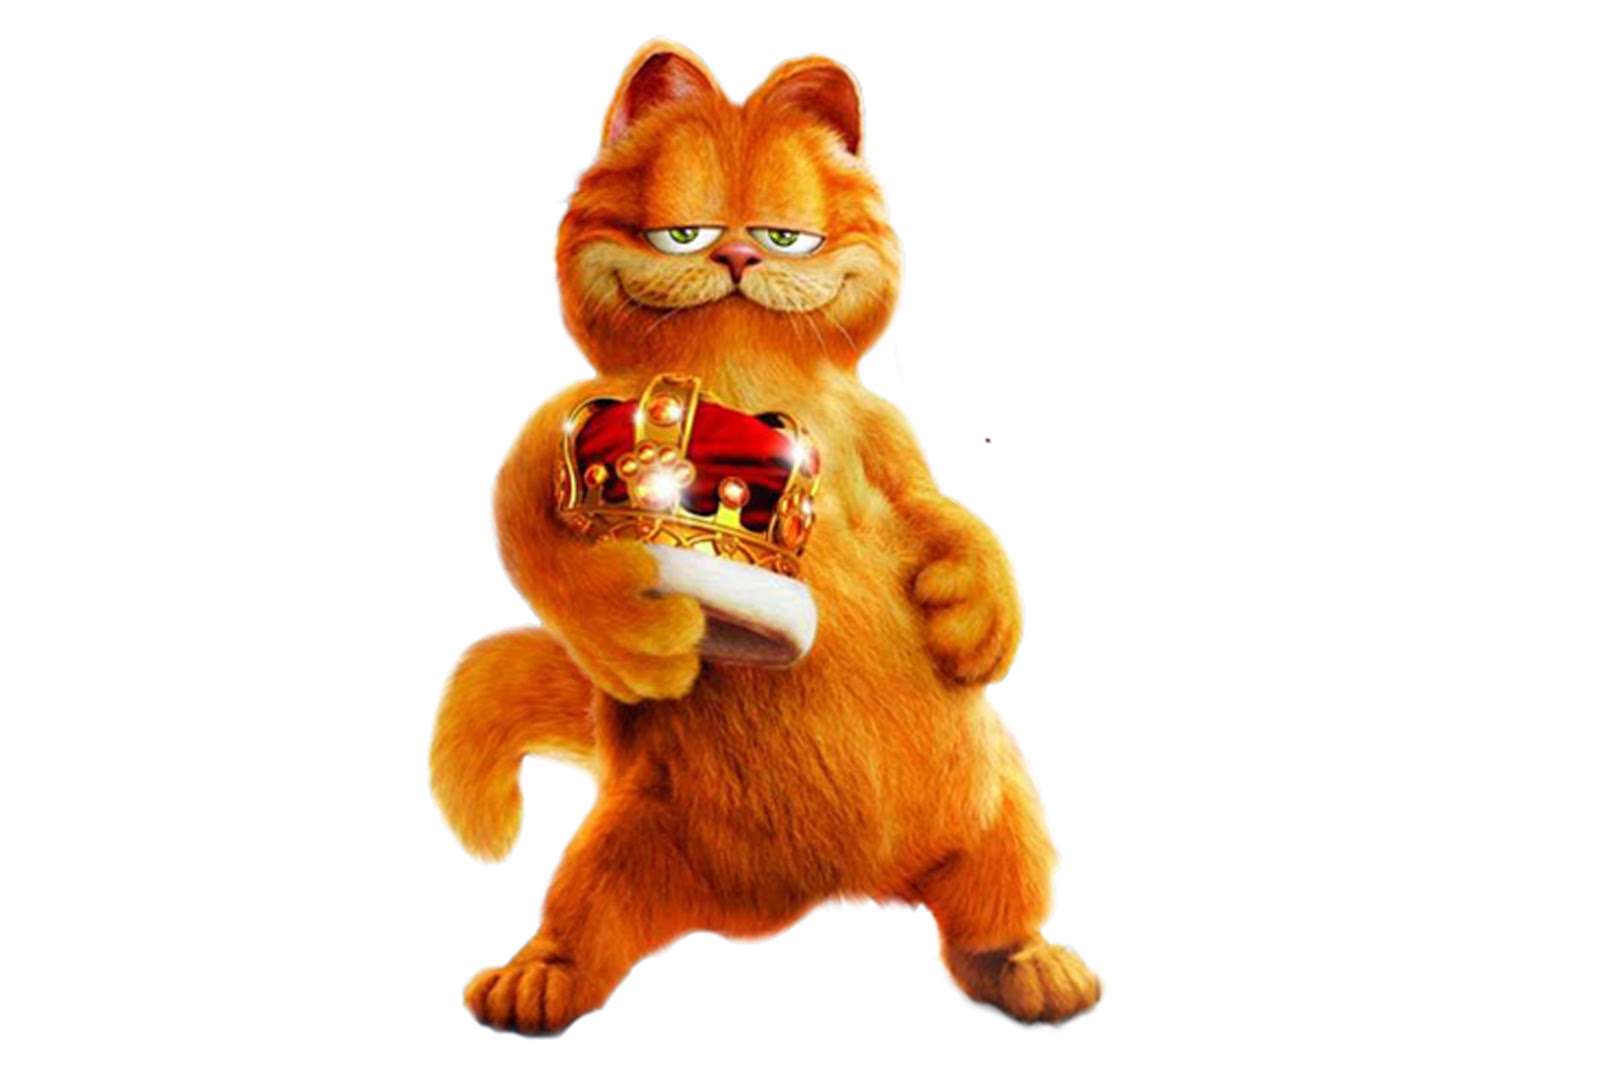  Gambar  Wallpaper Lucu  Gambar  Kucing Garfield  Terbaru 2020 